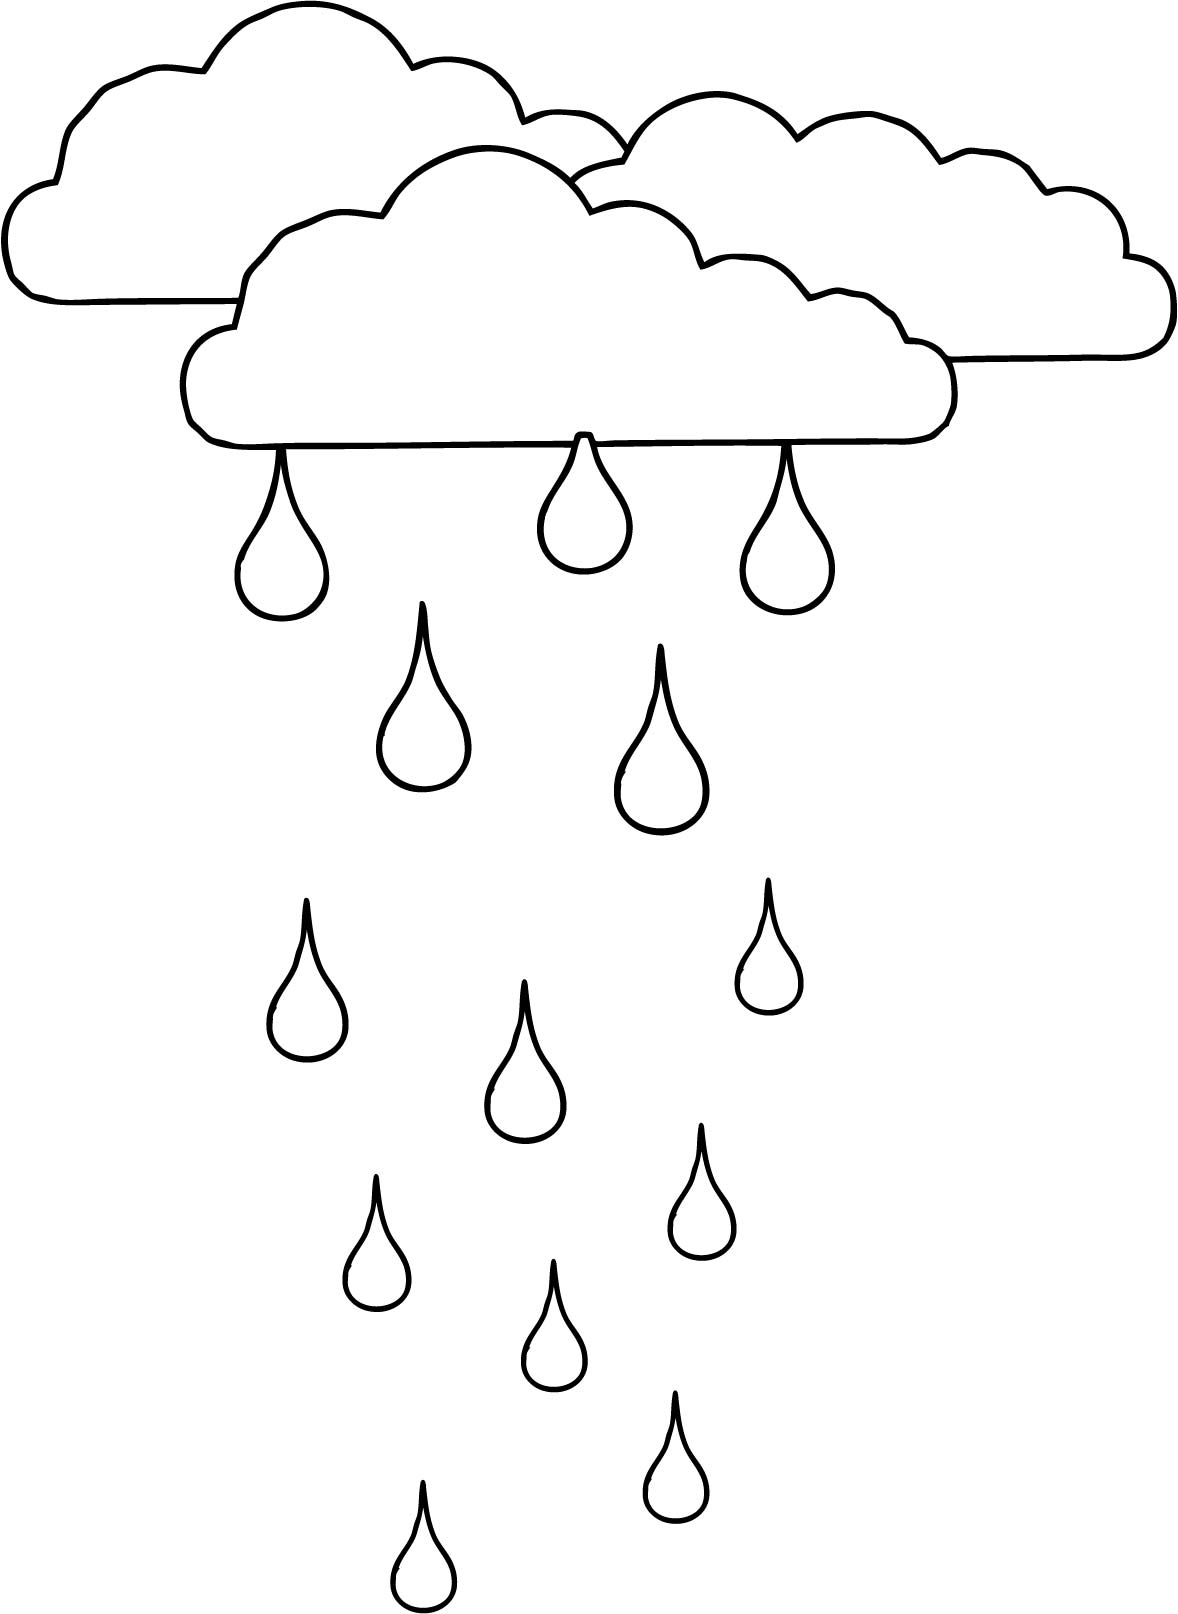 rain-cloud-coloring-page-at-getdrawings-free-download